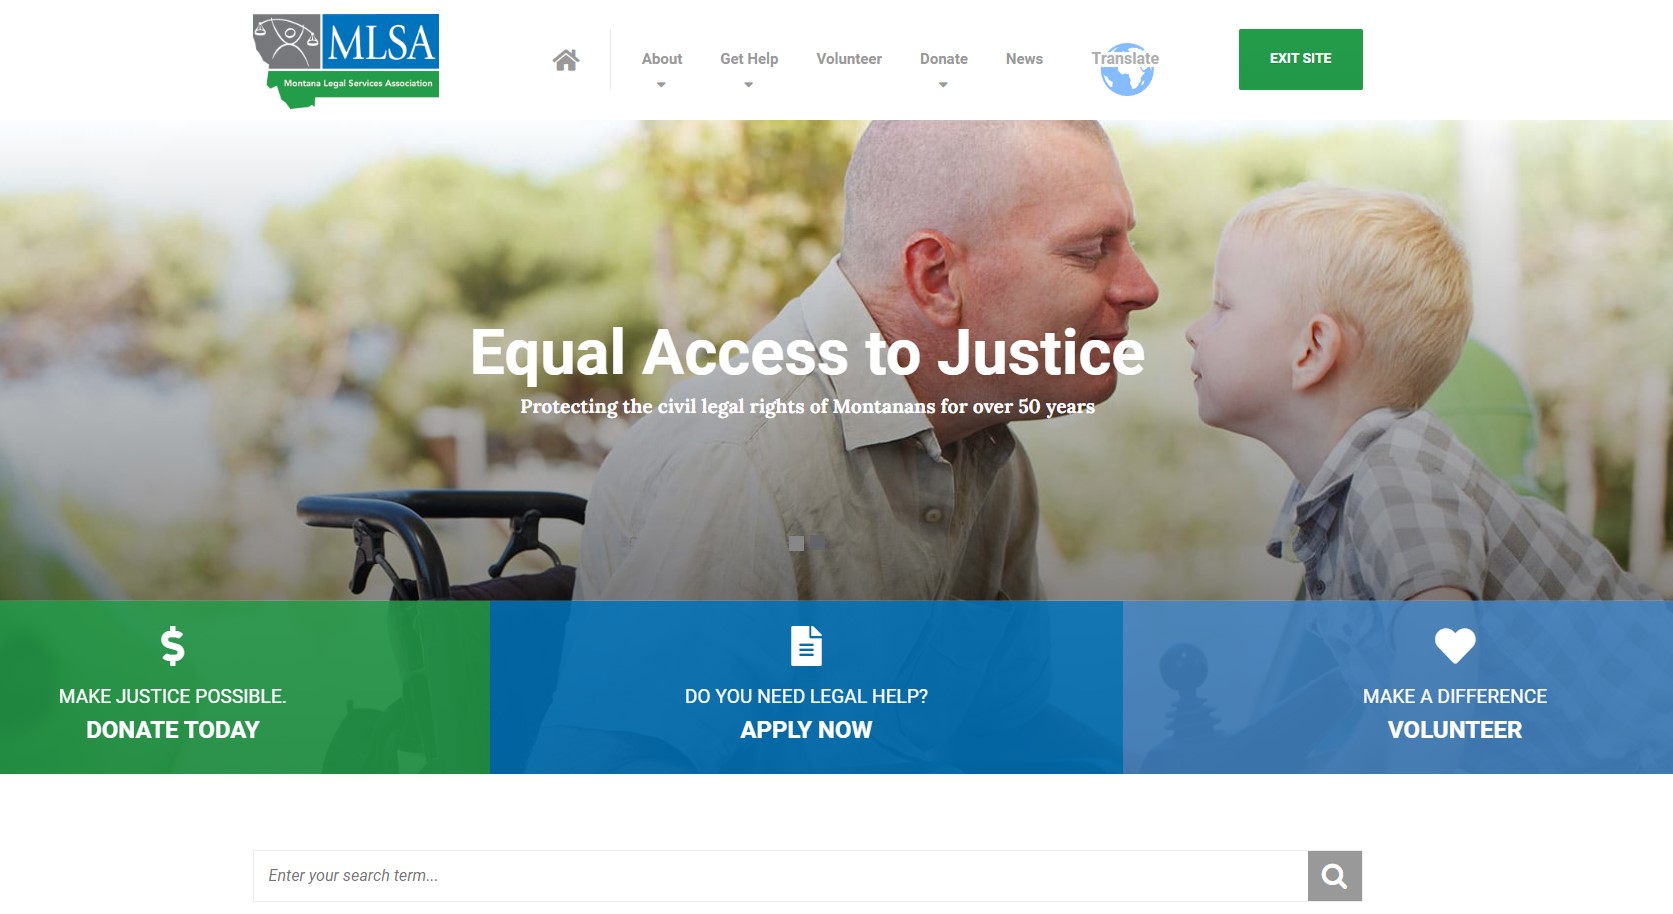 Montana Legal Services Association